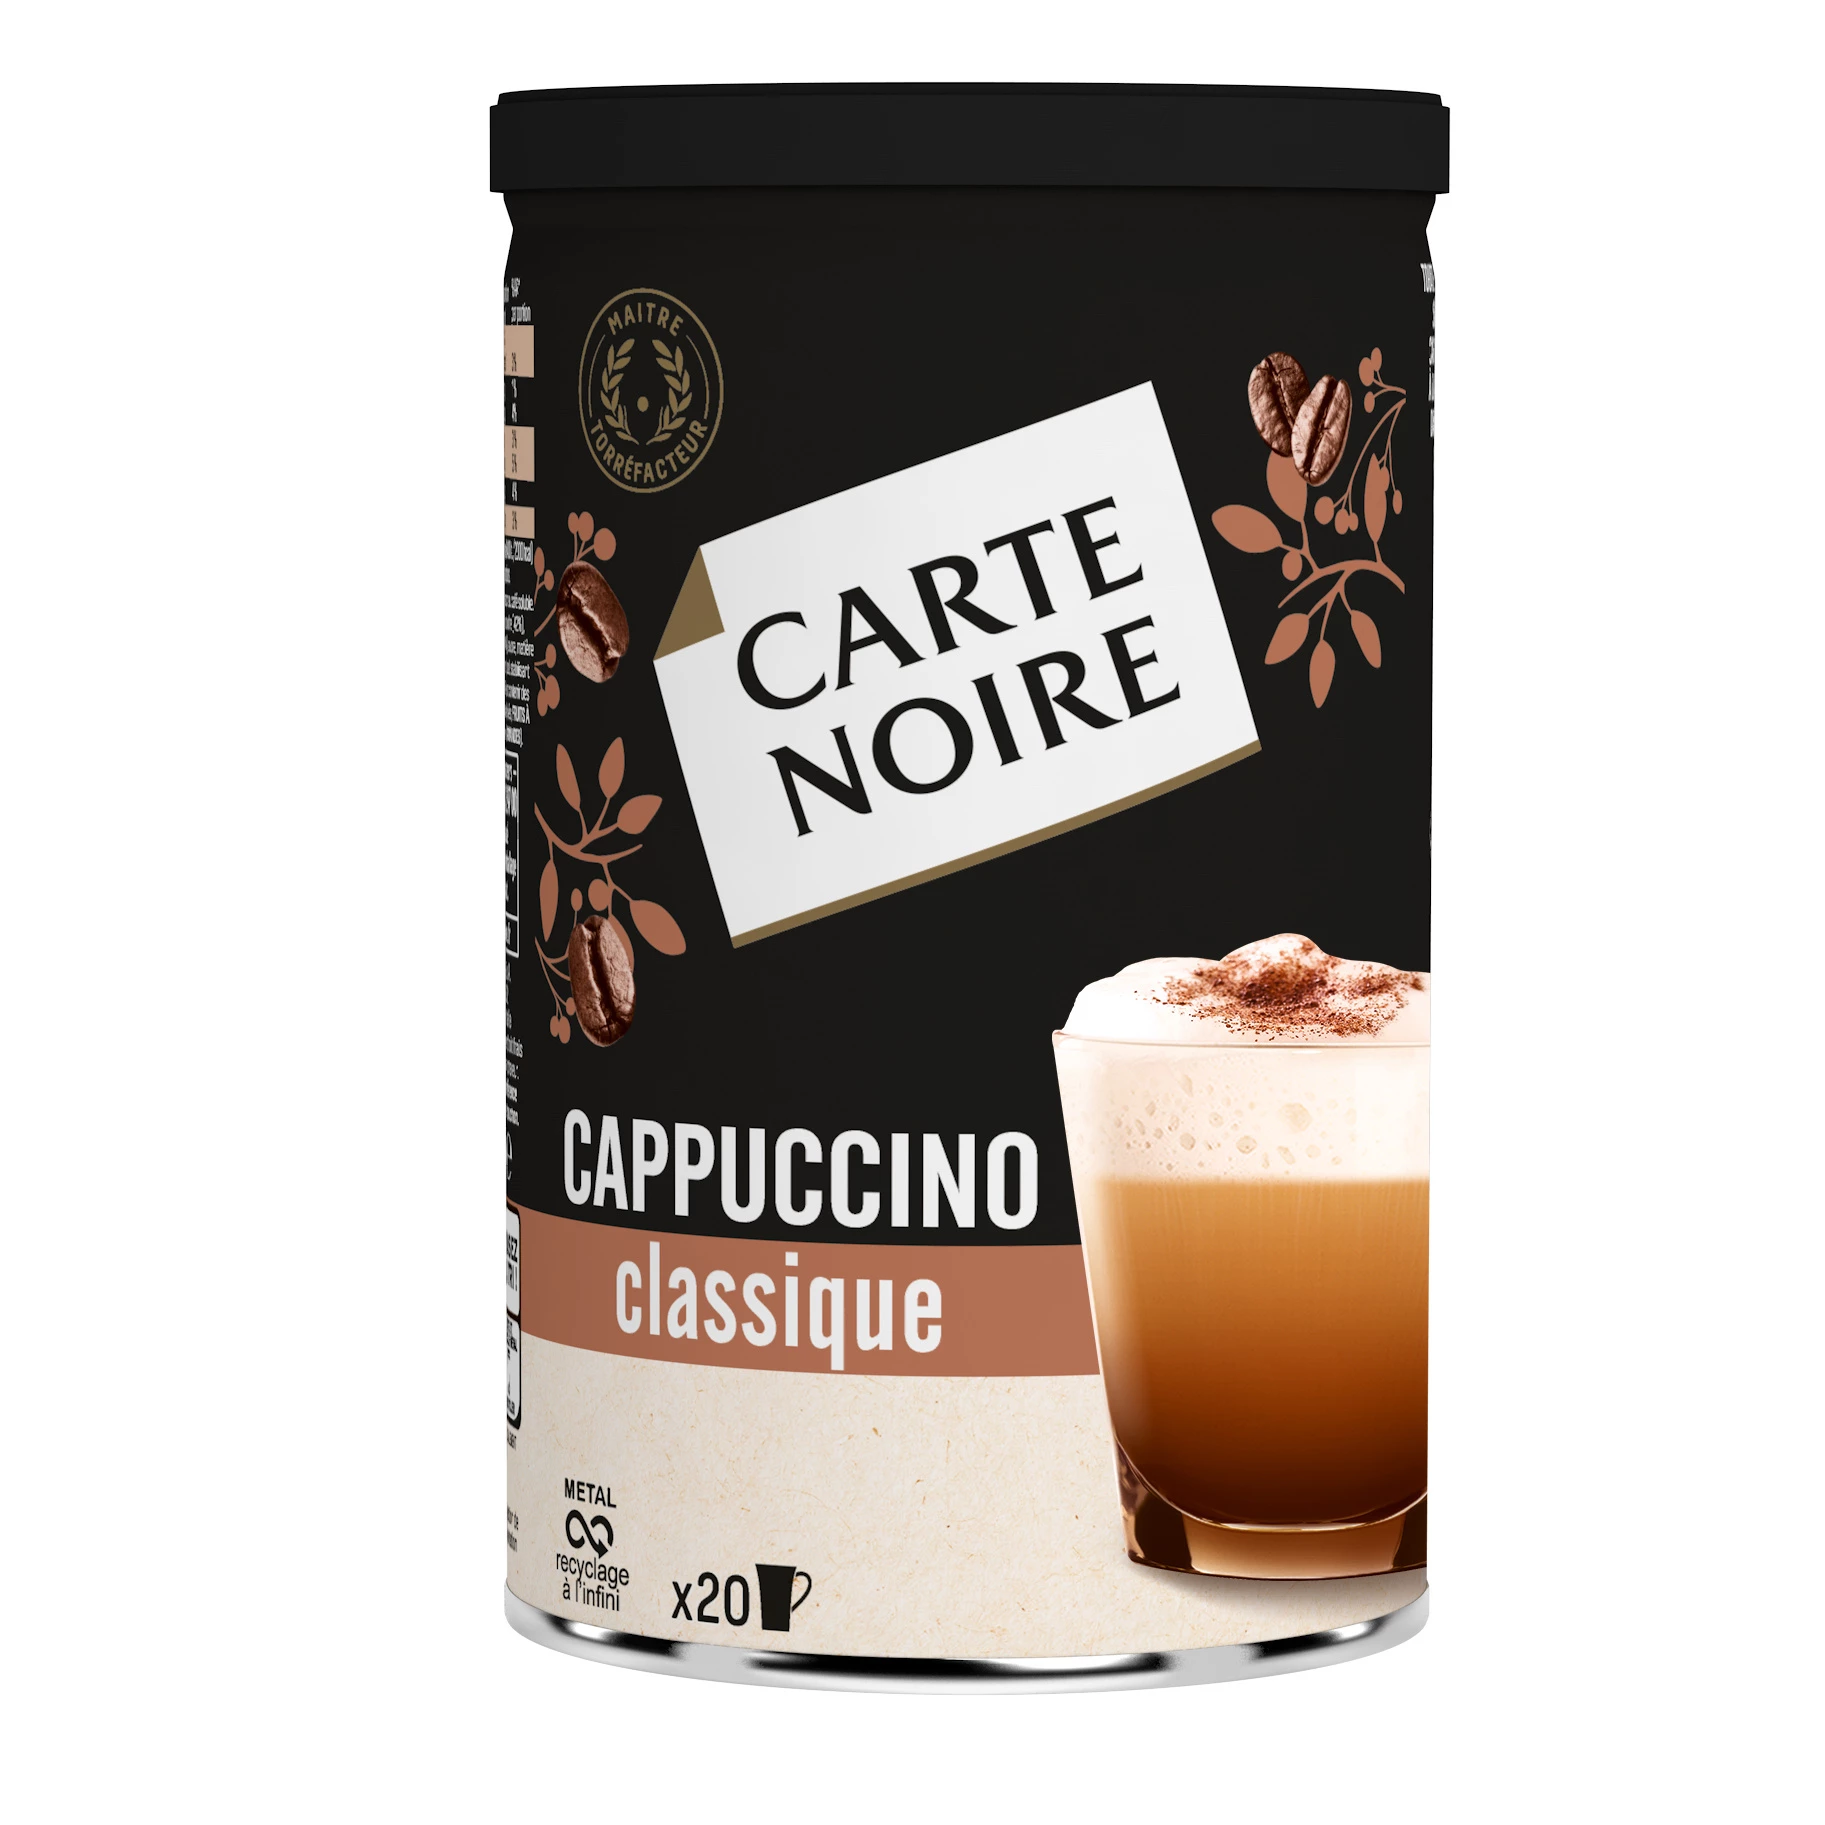 Capuccino Classique 250g - CARTE NOIRE